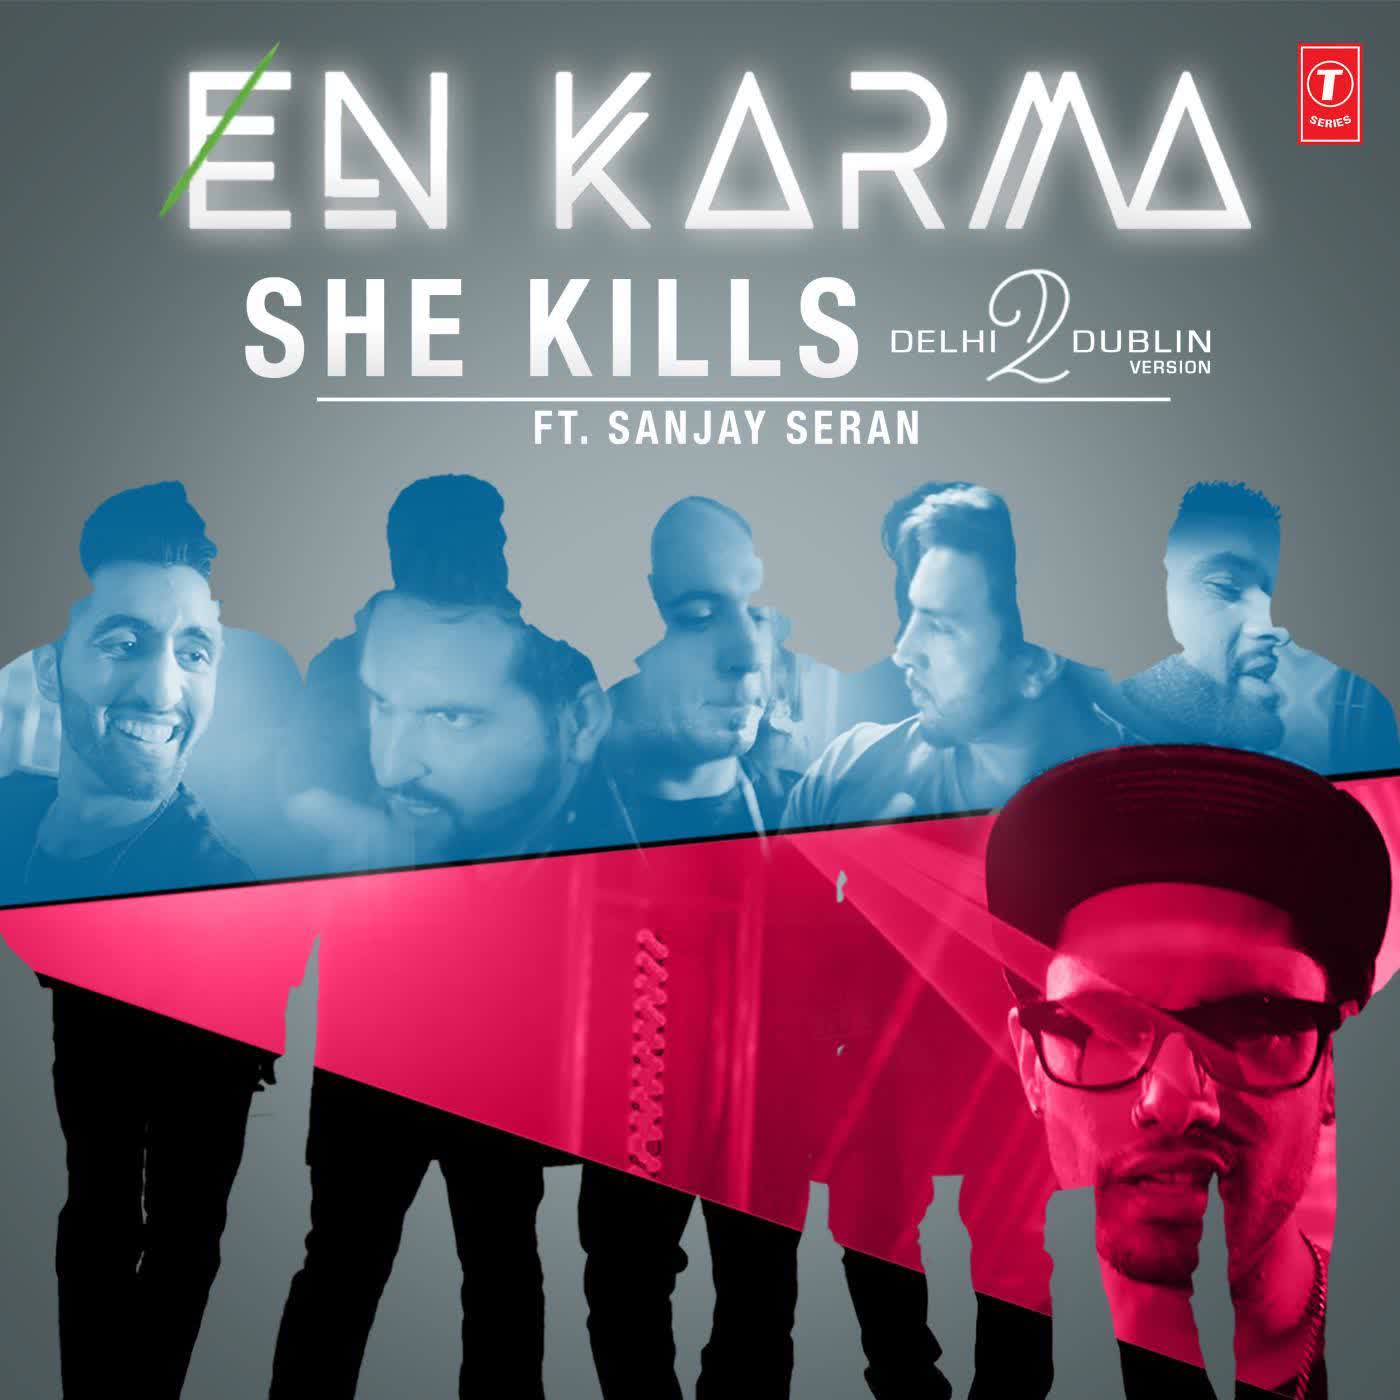 She Kills (Delhi2dublin Version) En Karma  Mp3 song download